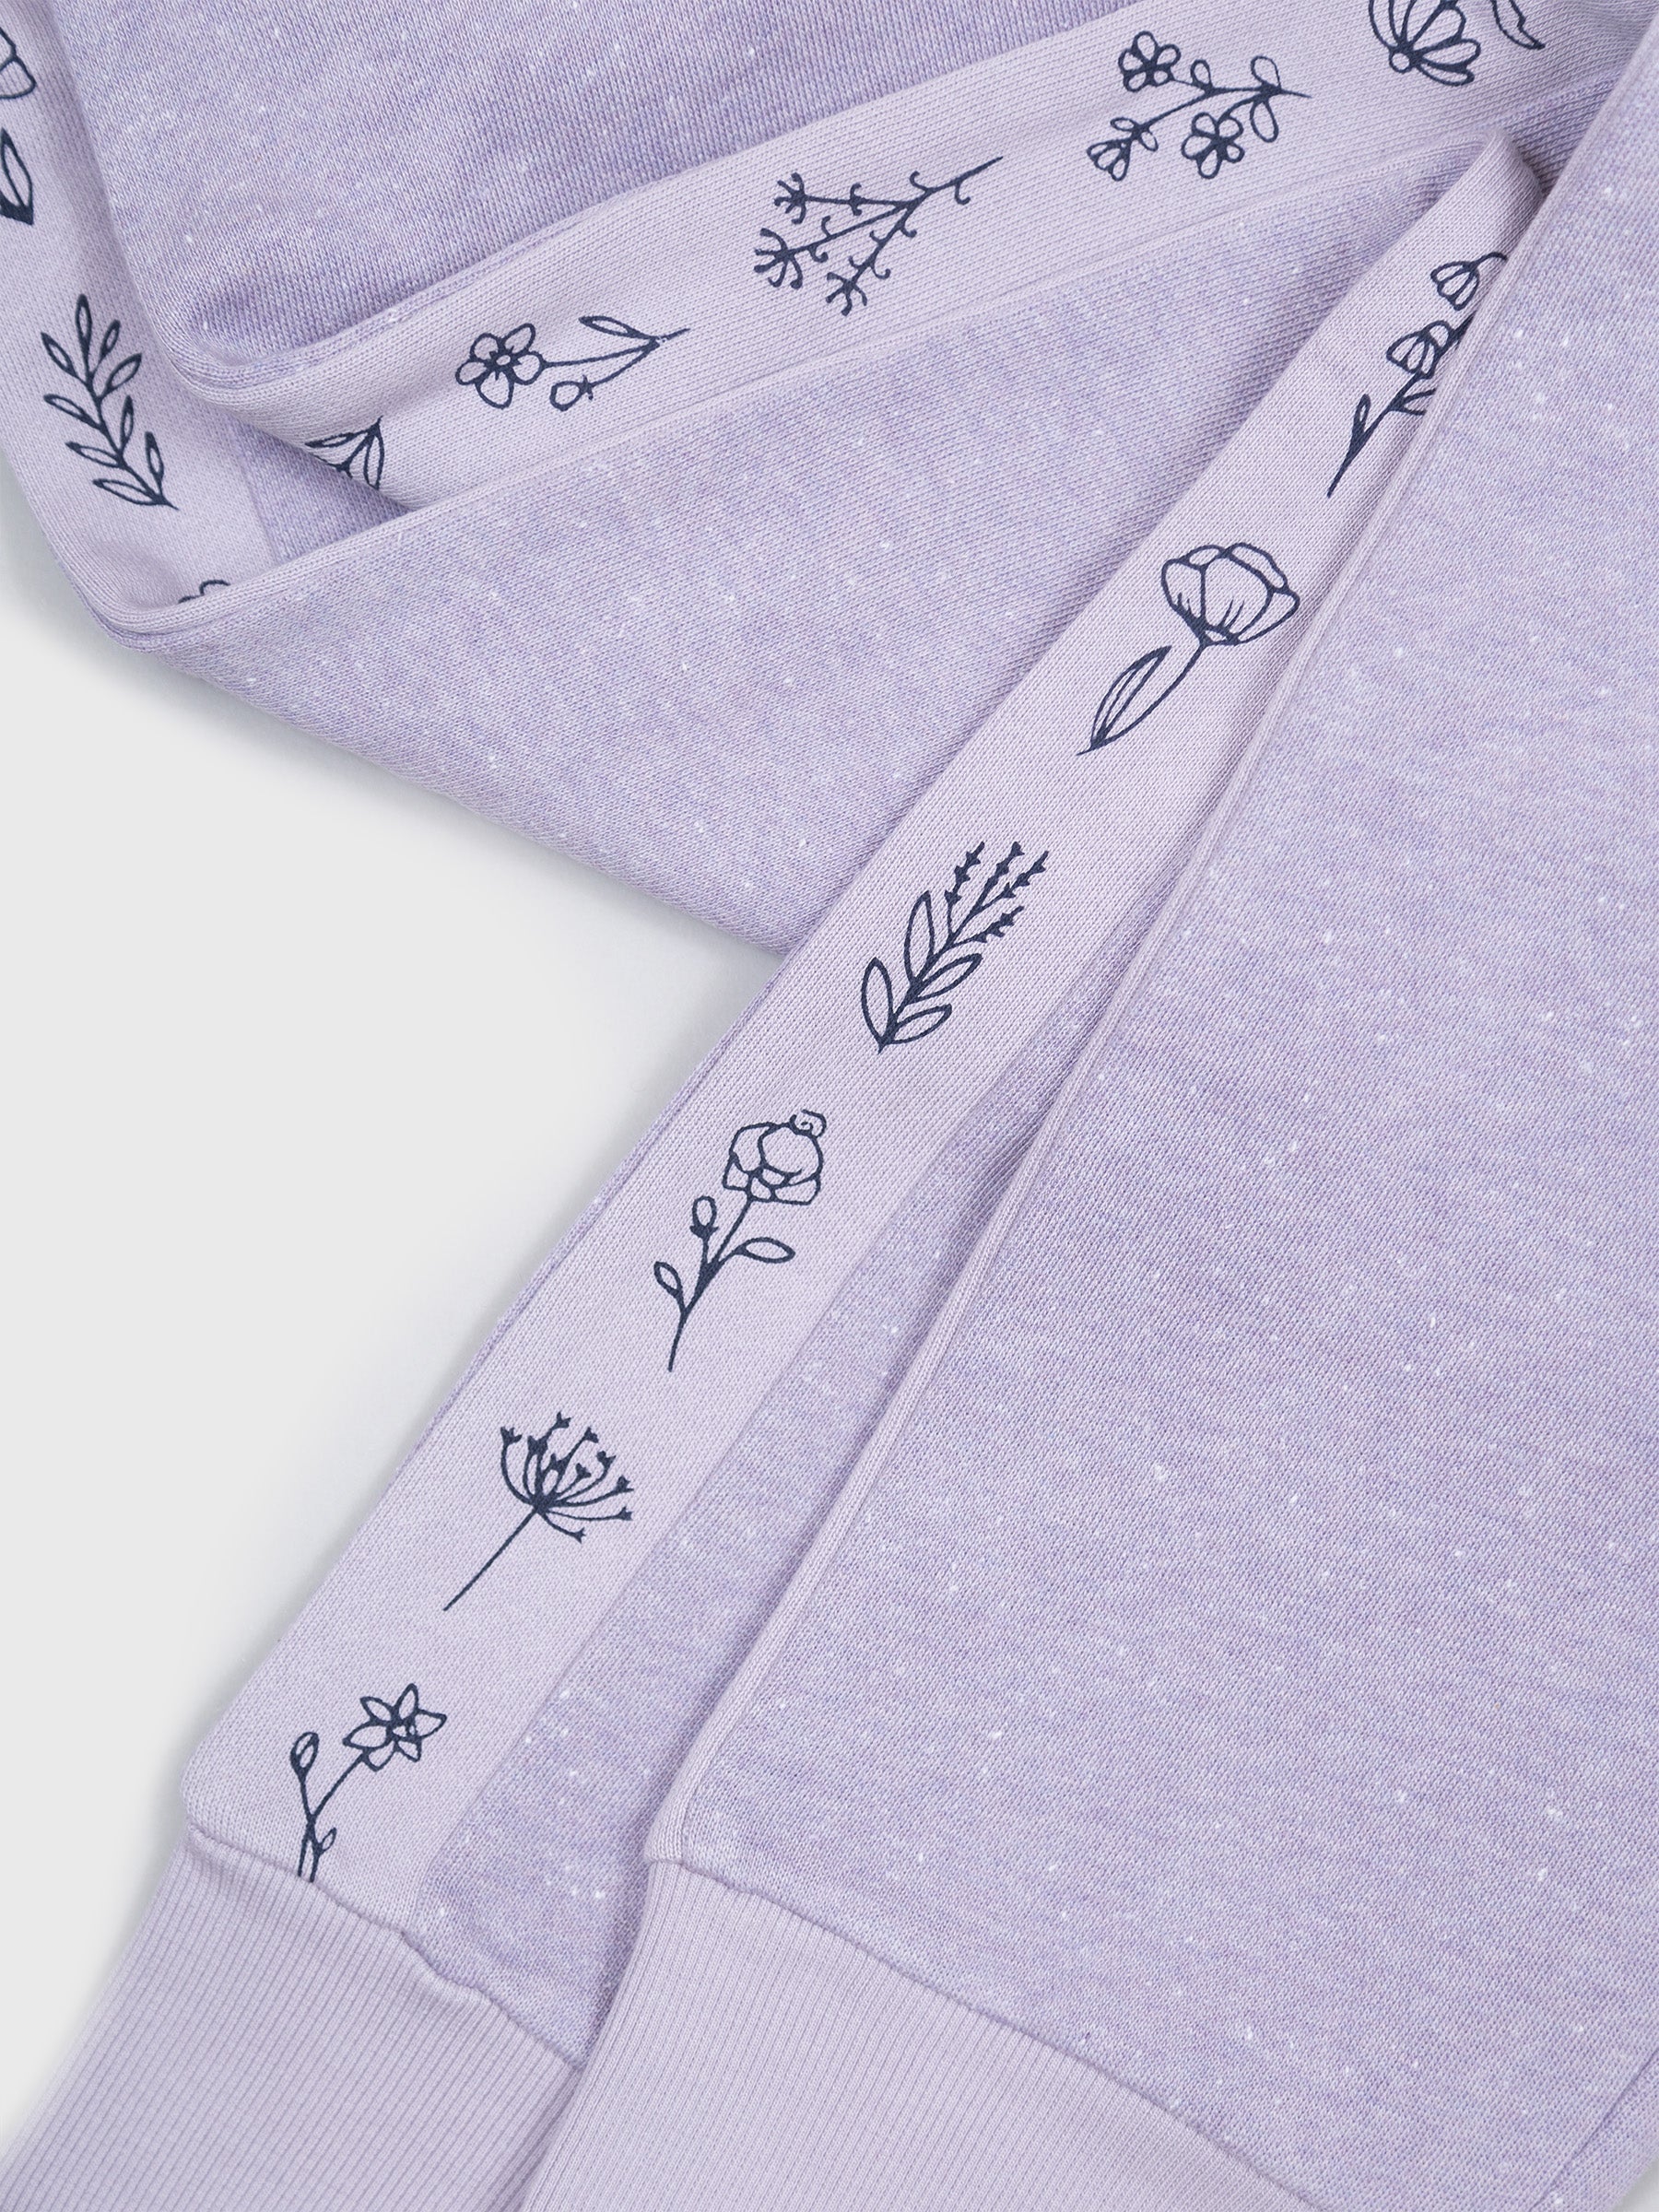 All-gender Lavender Organic Cotton Fleece Joggers - Purple